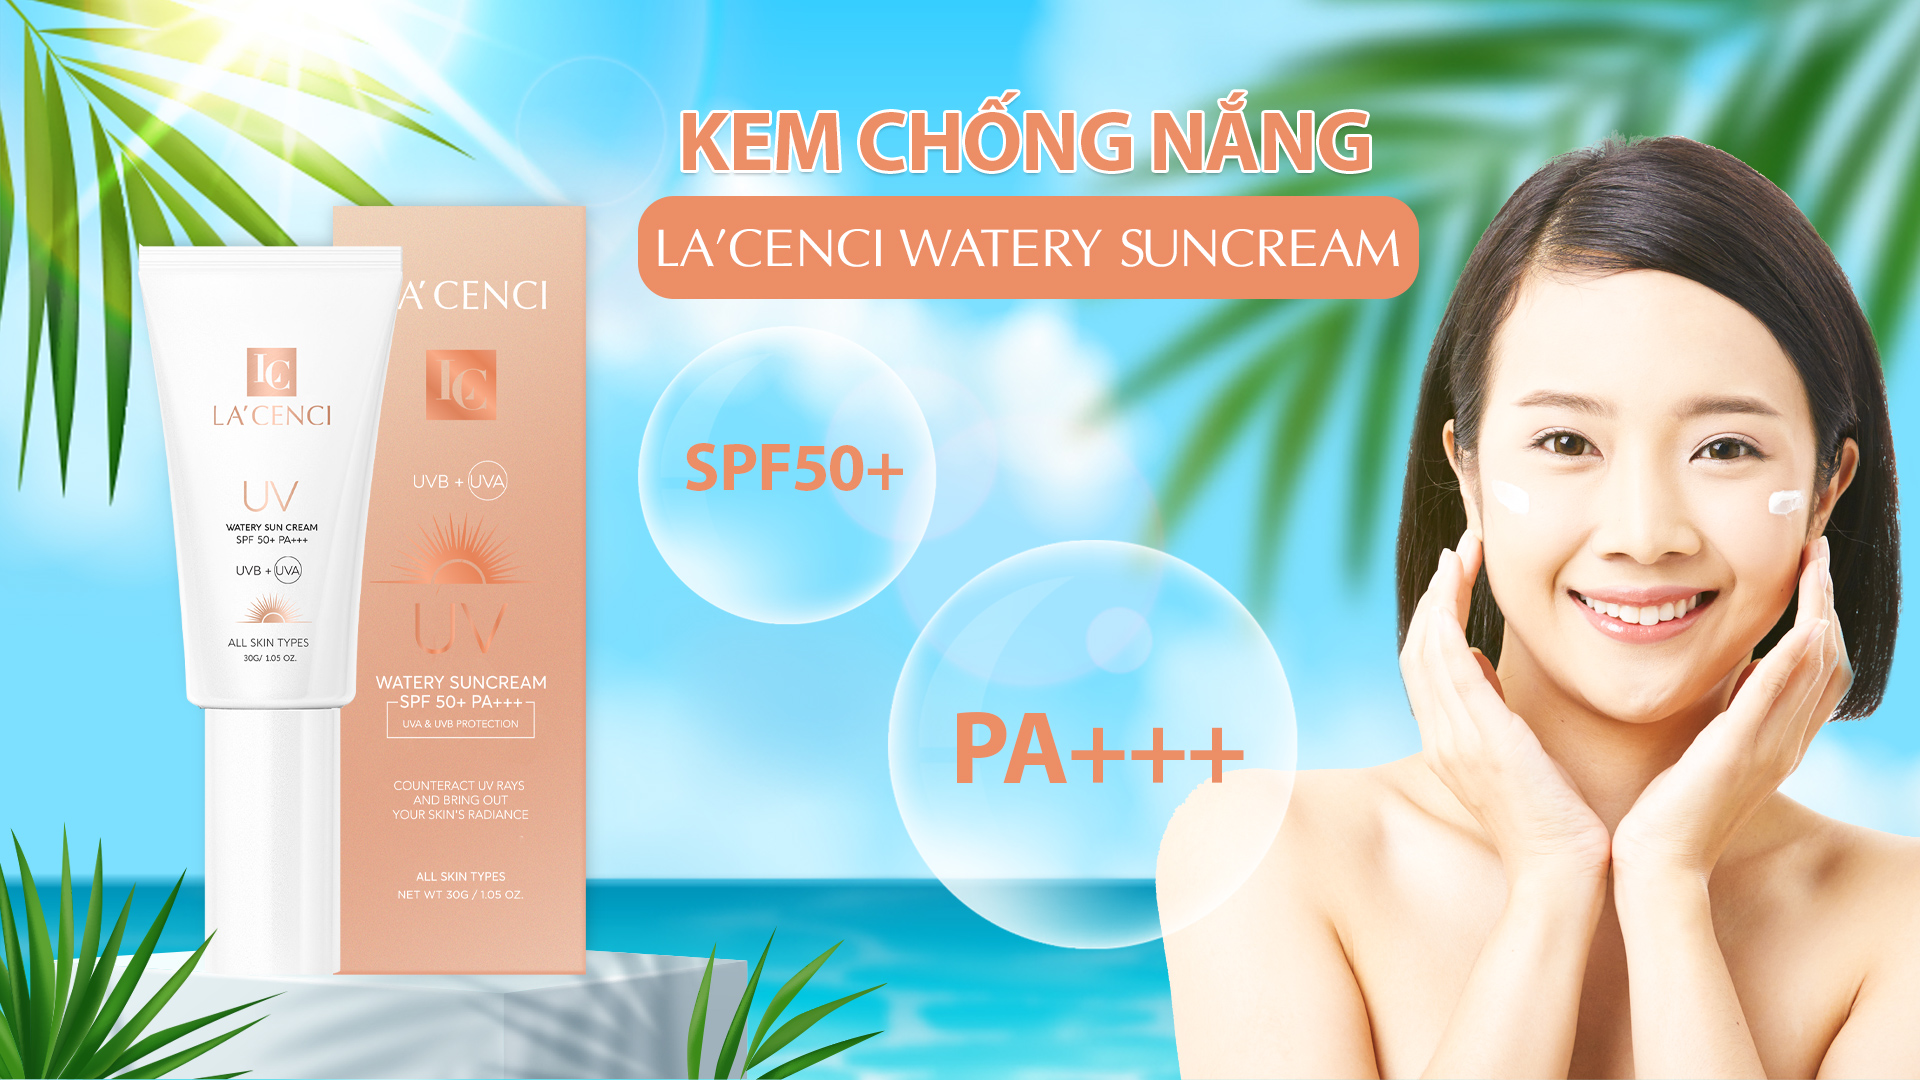 Kem chống nắng - La’cenci Watery Suncream SPF50+/PA+++